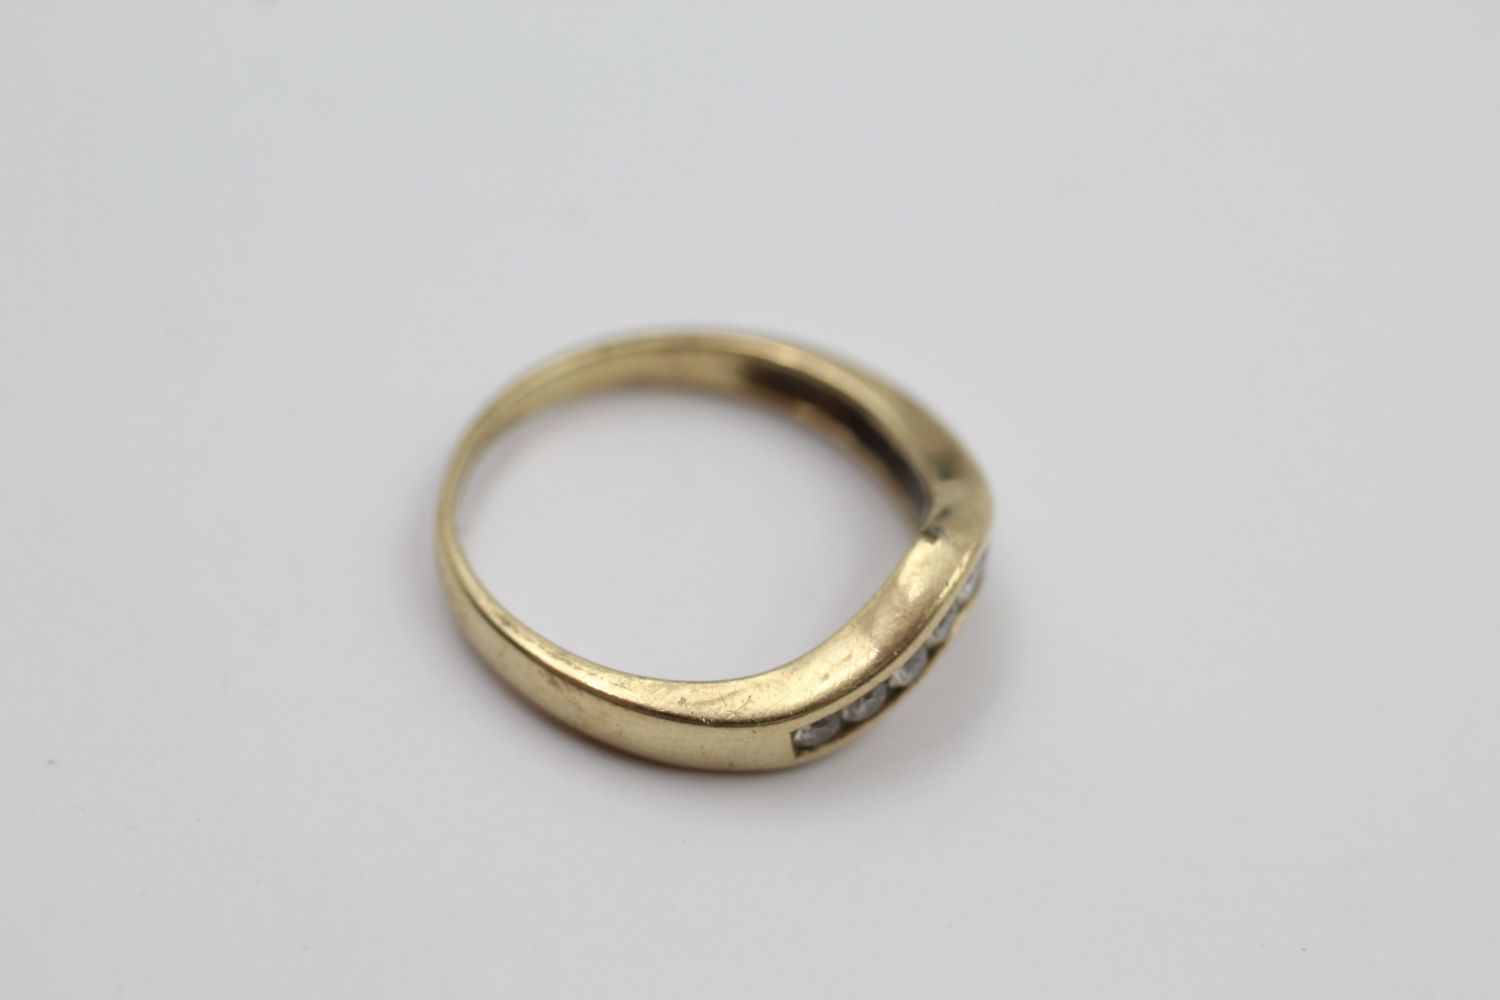 9ct gold caliber cut gemstone chevron ring 1.8 grams gross - Image 4 of 4